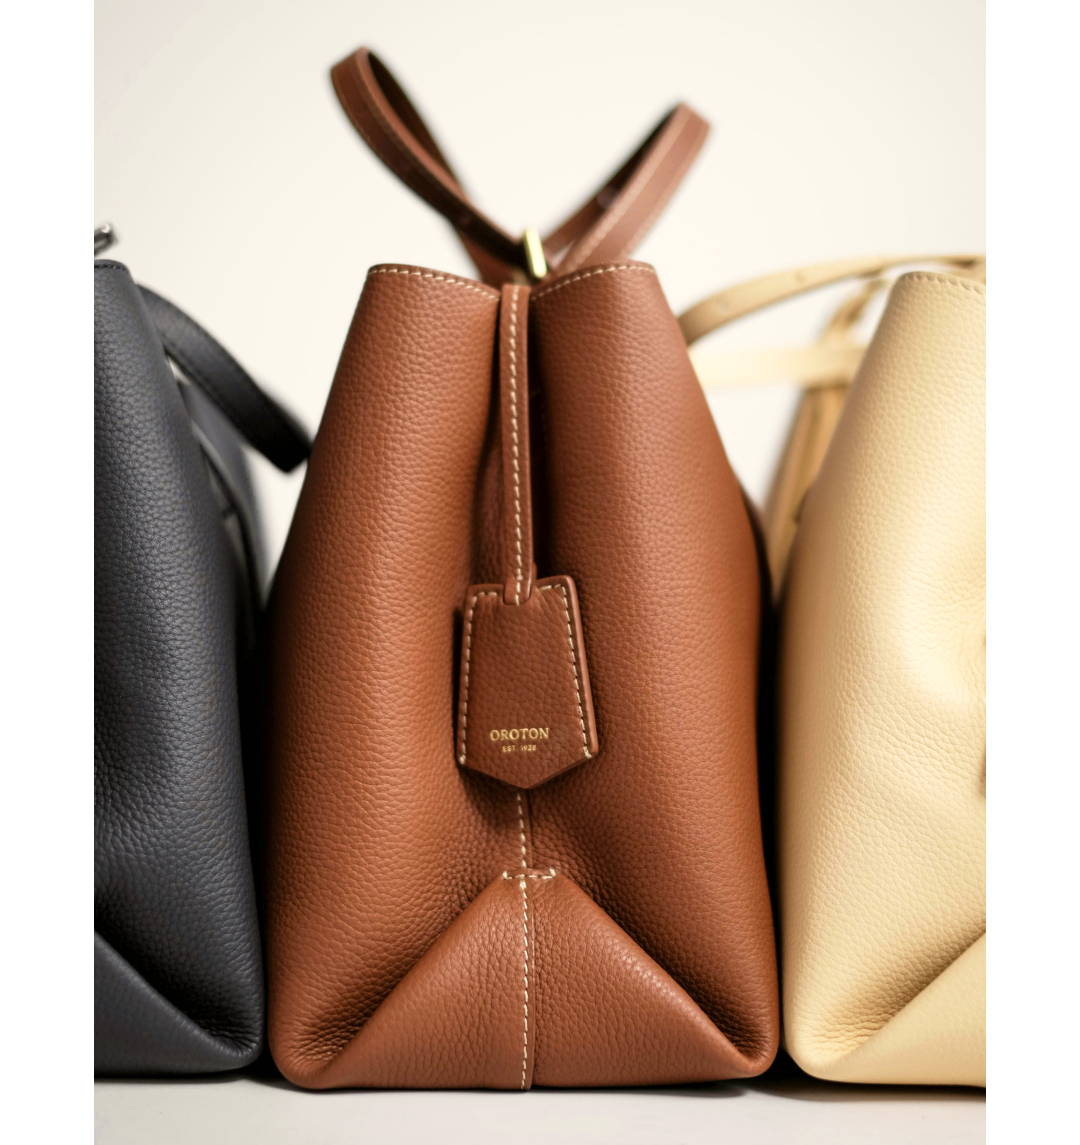 Oroton Designer Leather Handbags